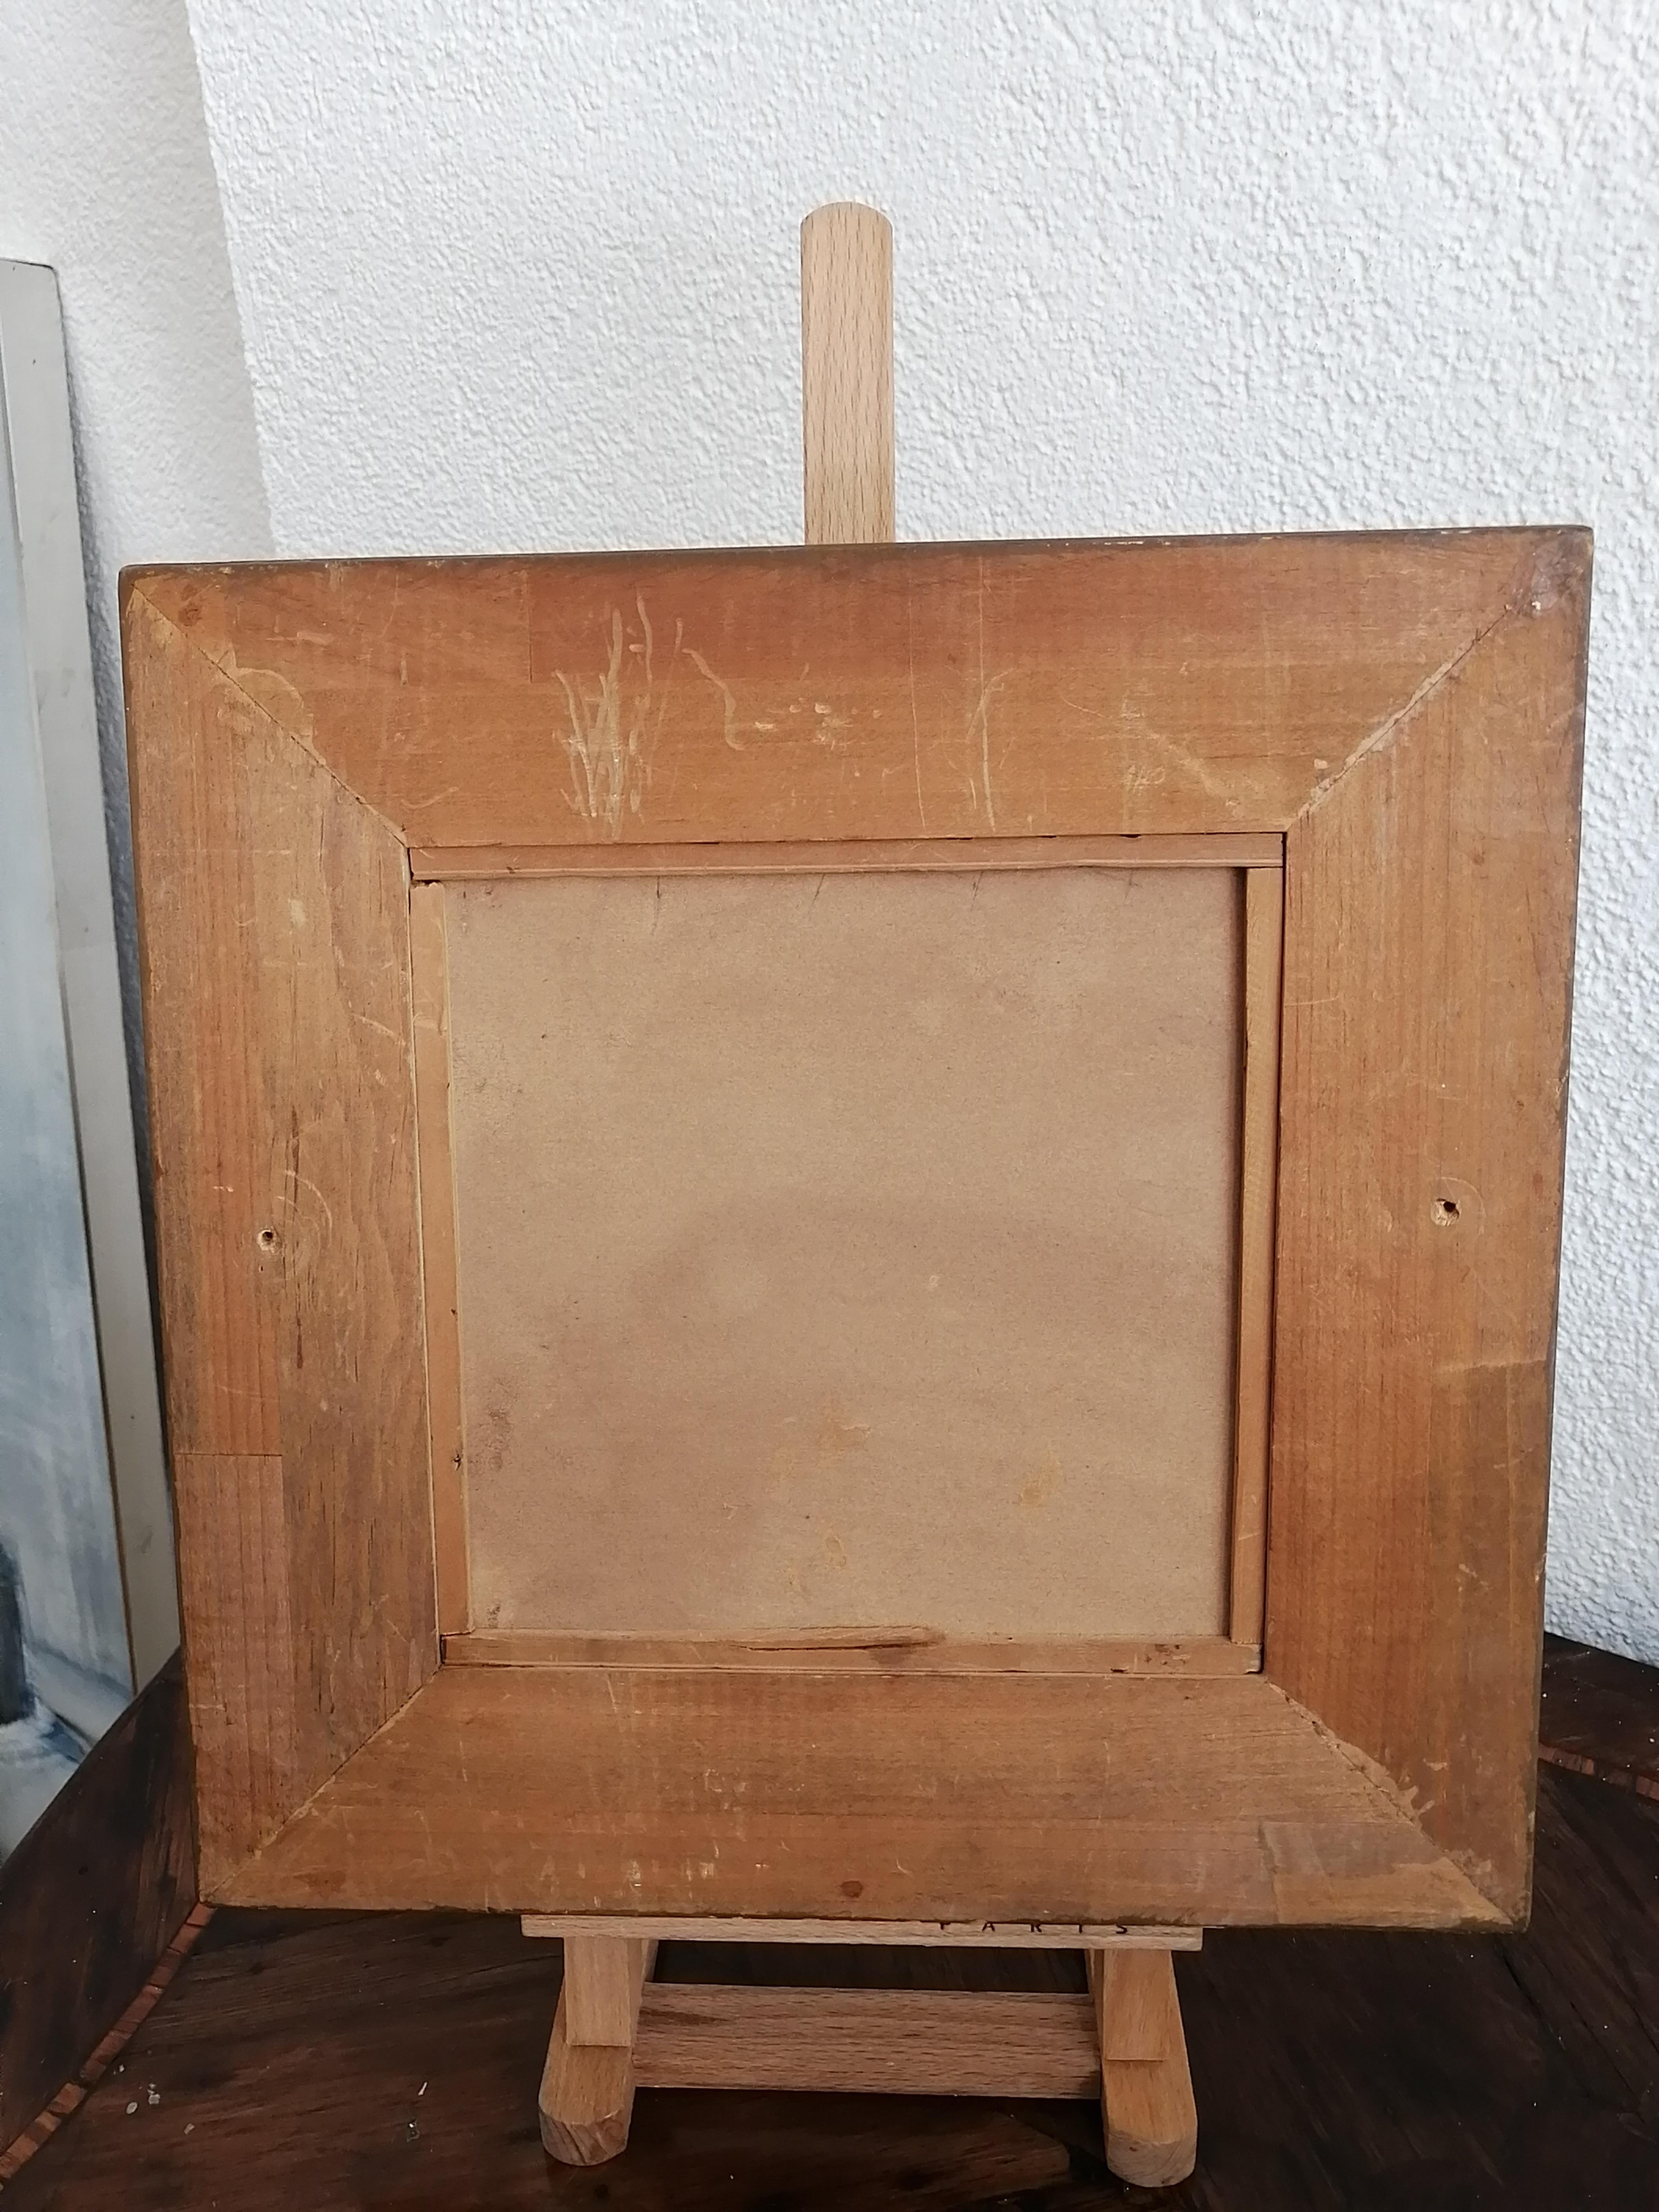 Work on cardboard
Golden wooden frame
29.5 x 29.5 x 4.5 cm